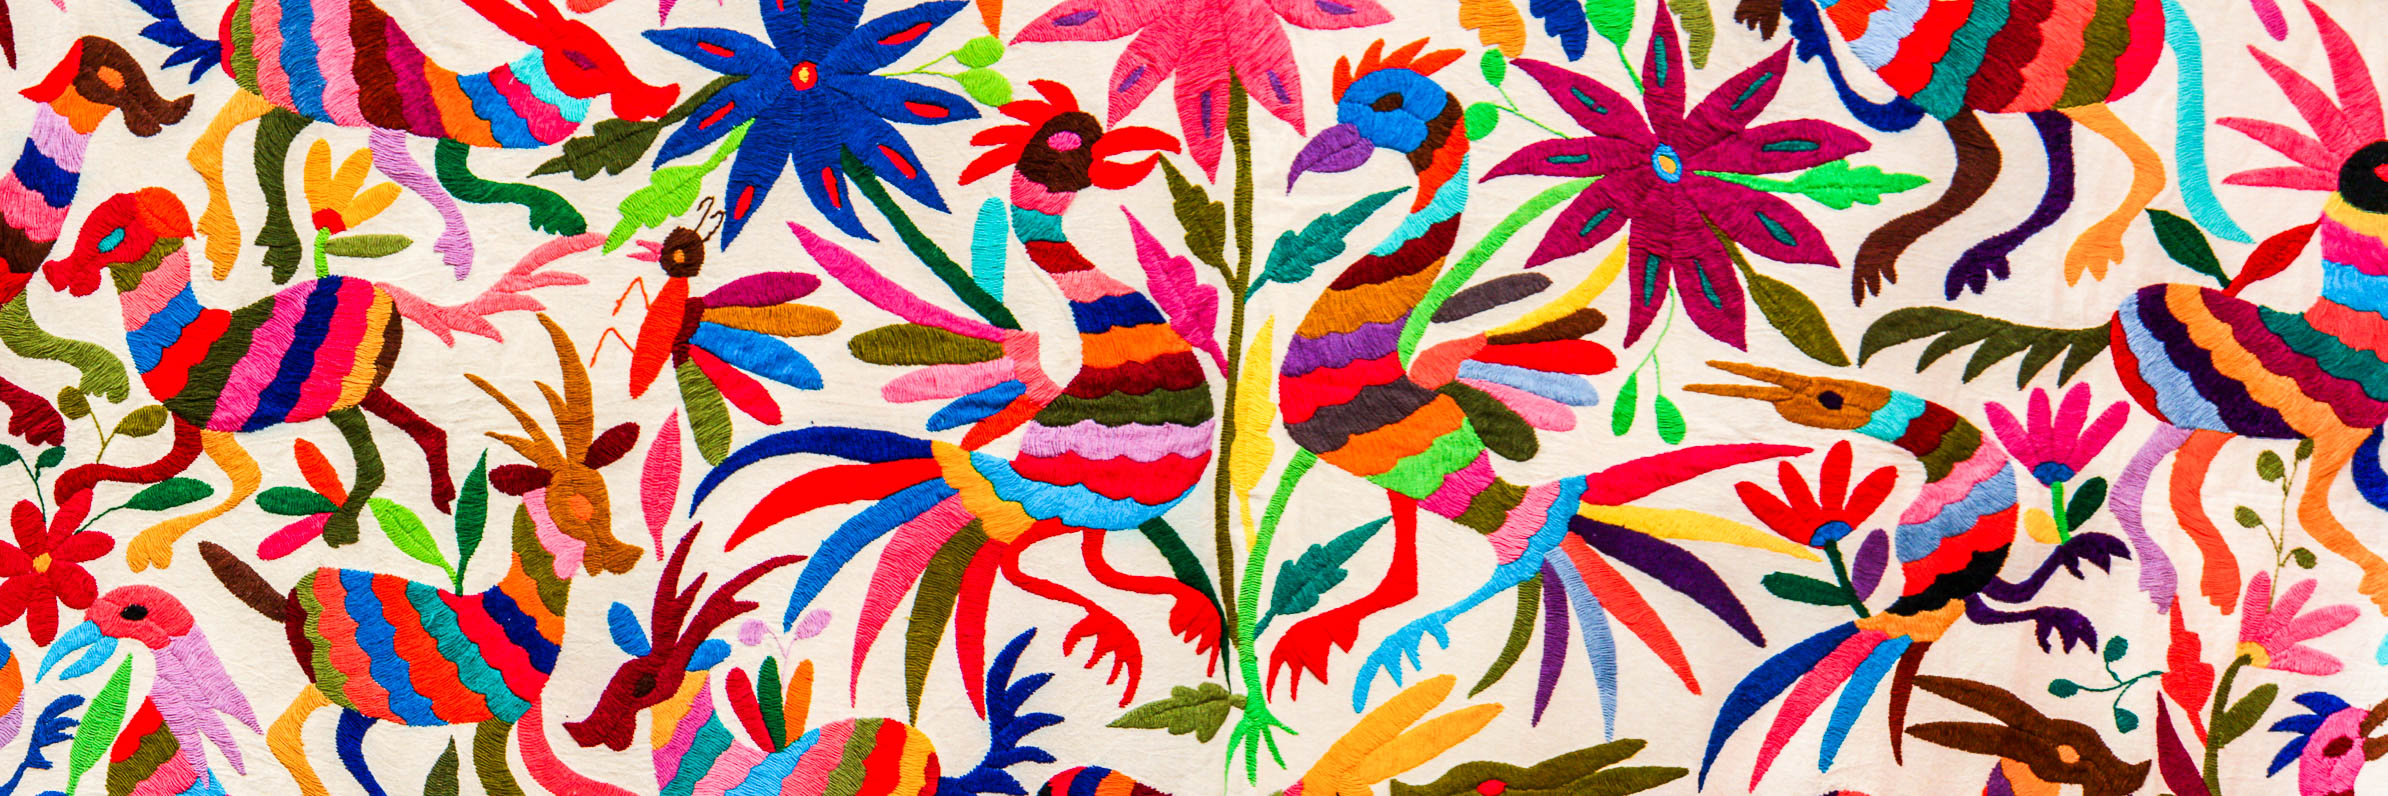 Latin American embroidery